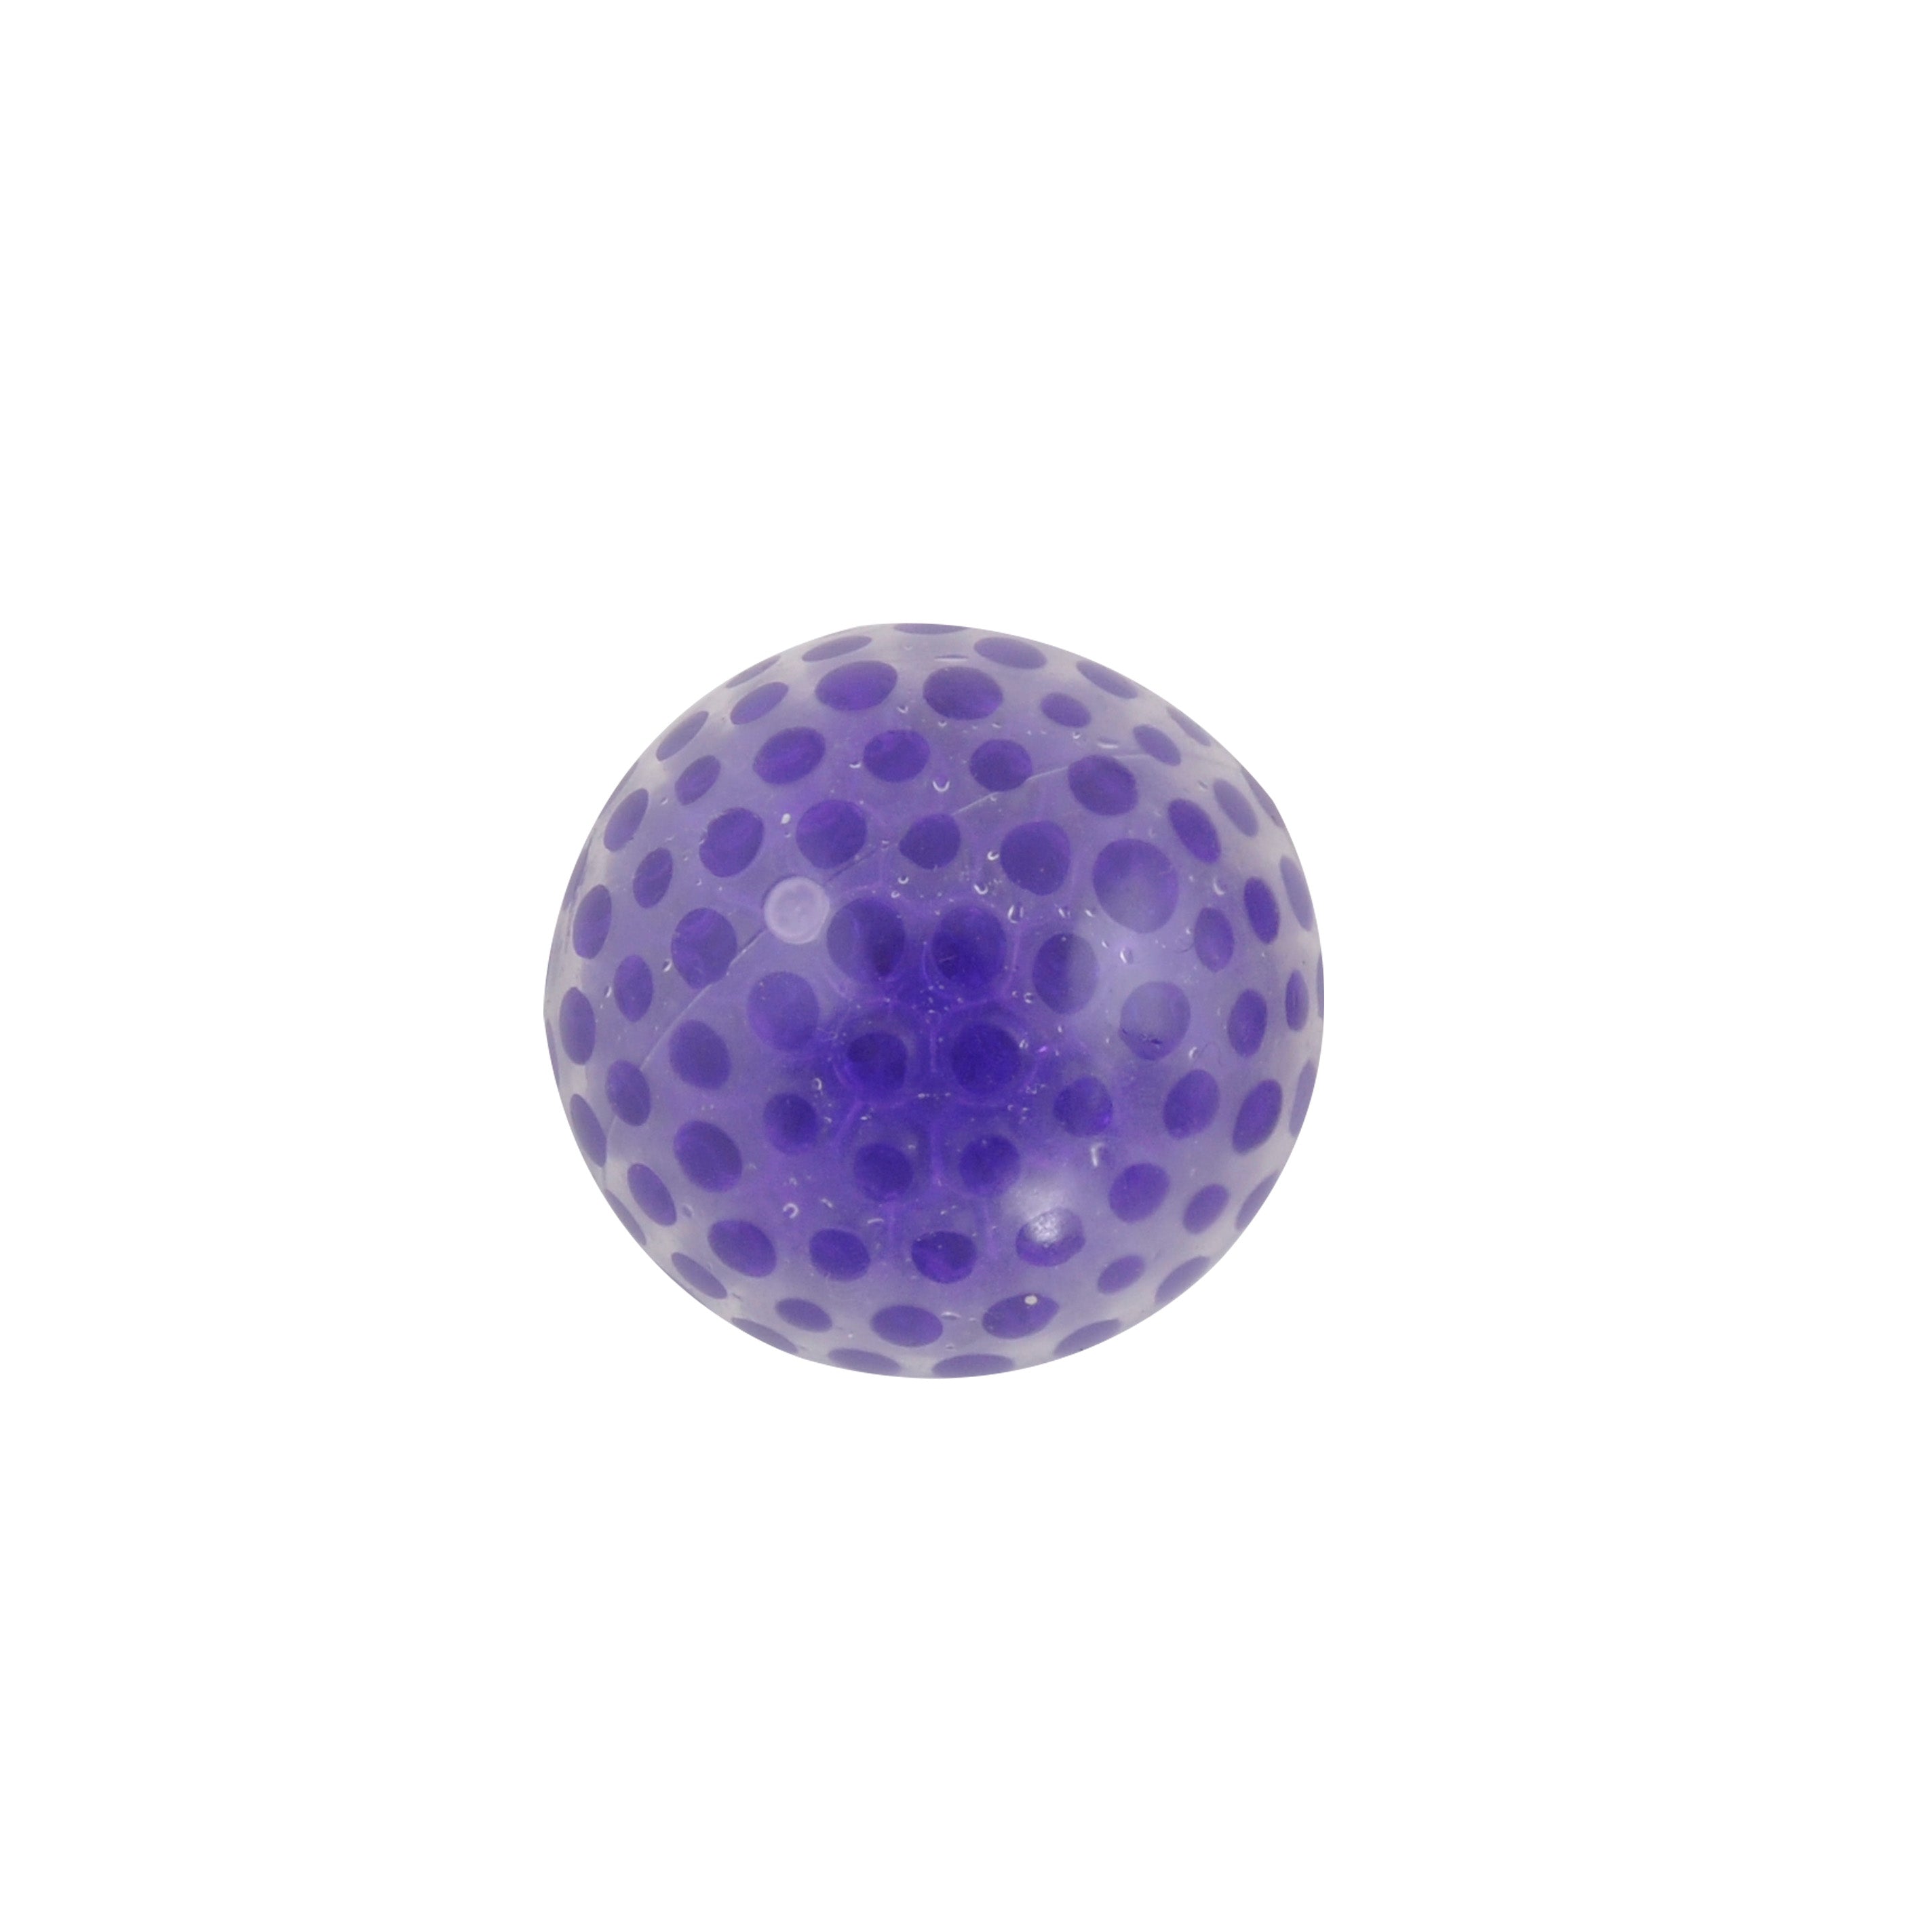 KaiserKids Water Bead Ball - PURPLE